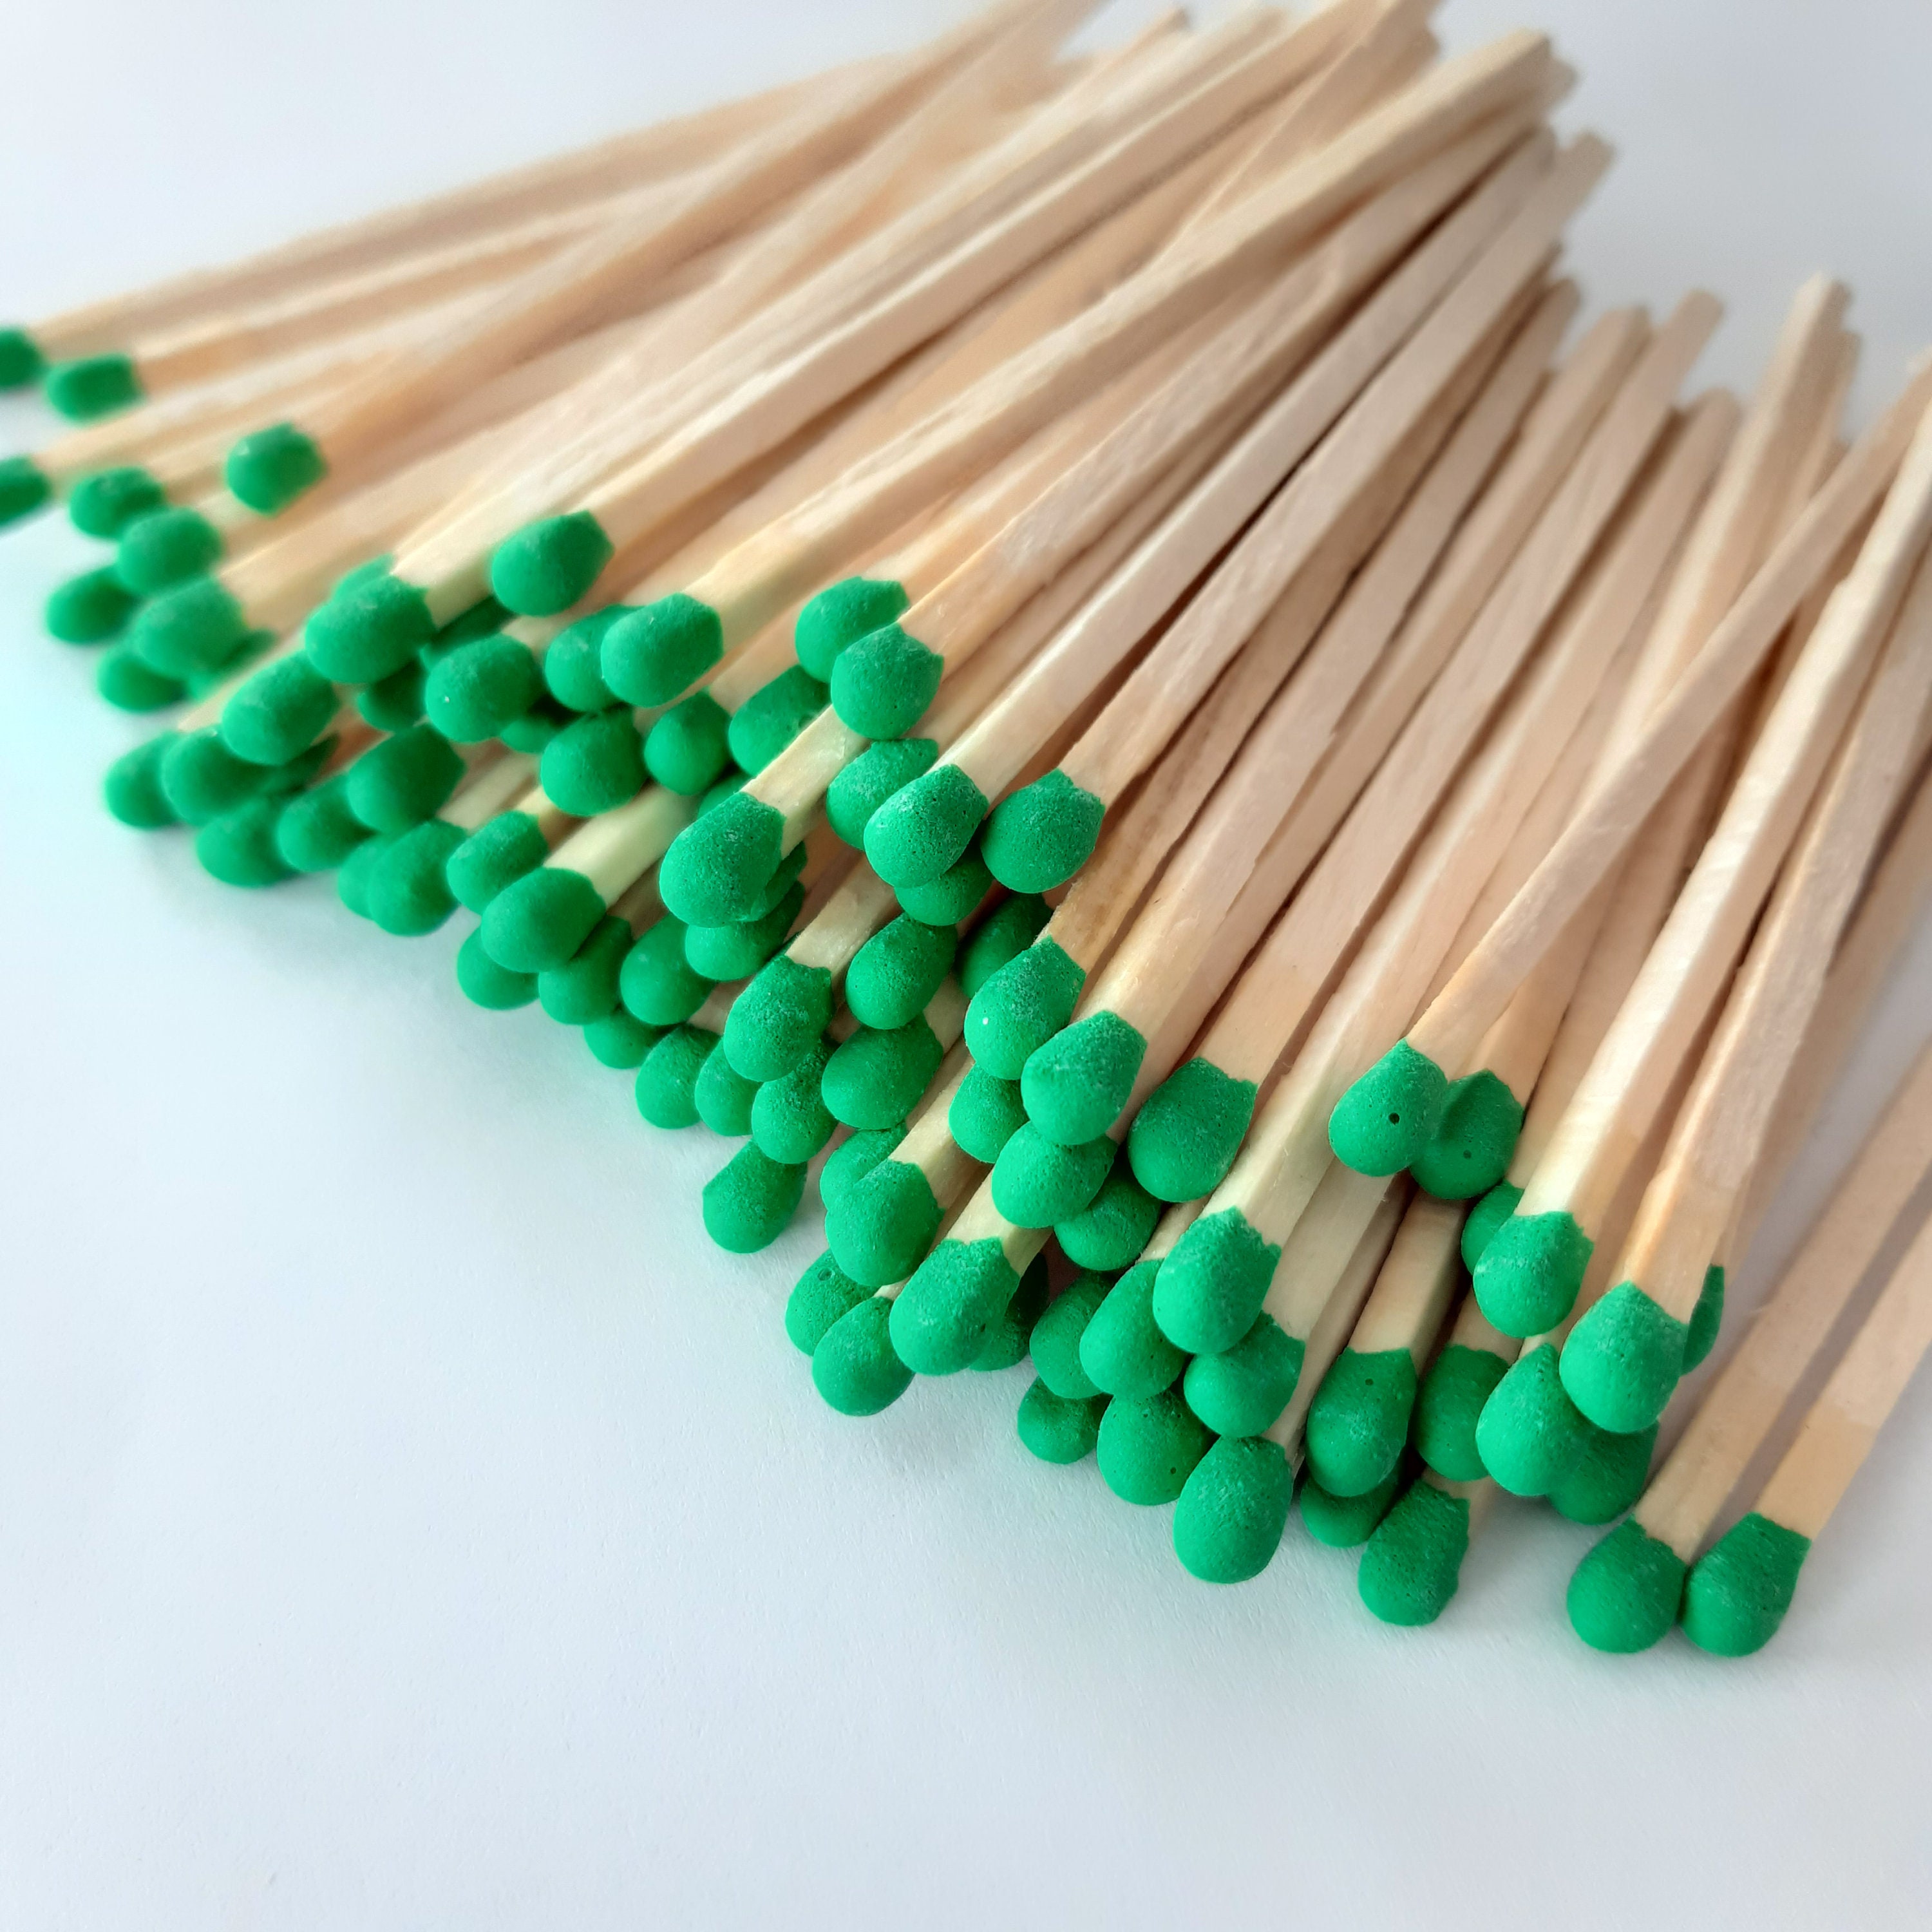 River Birch Emerald Green Tip Decorative Matches | 200+ Small Premium  Wooden Safety Matches | Replacement Refill Matchsticks | Lighting | Home  Decor